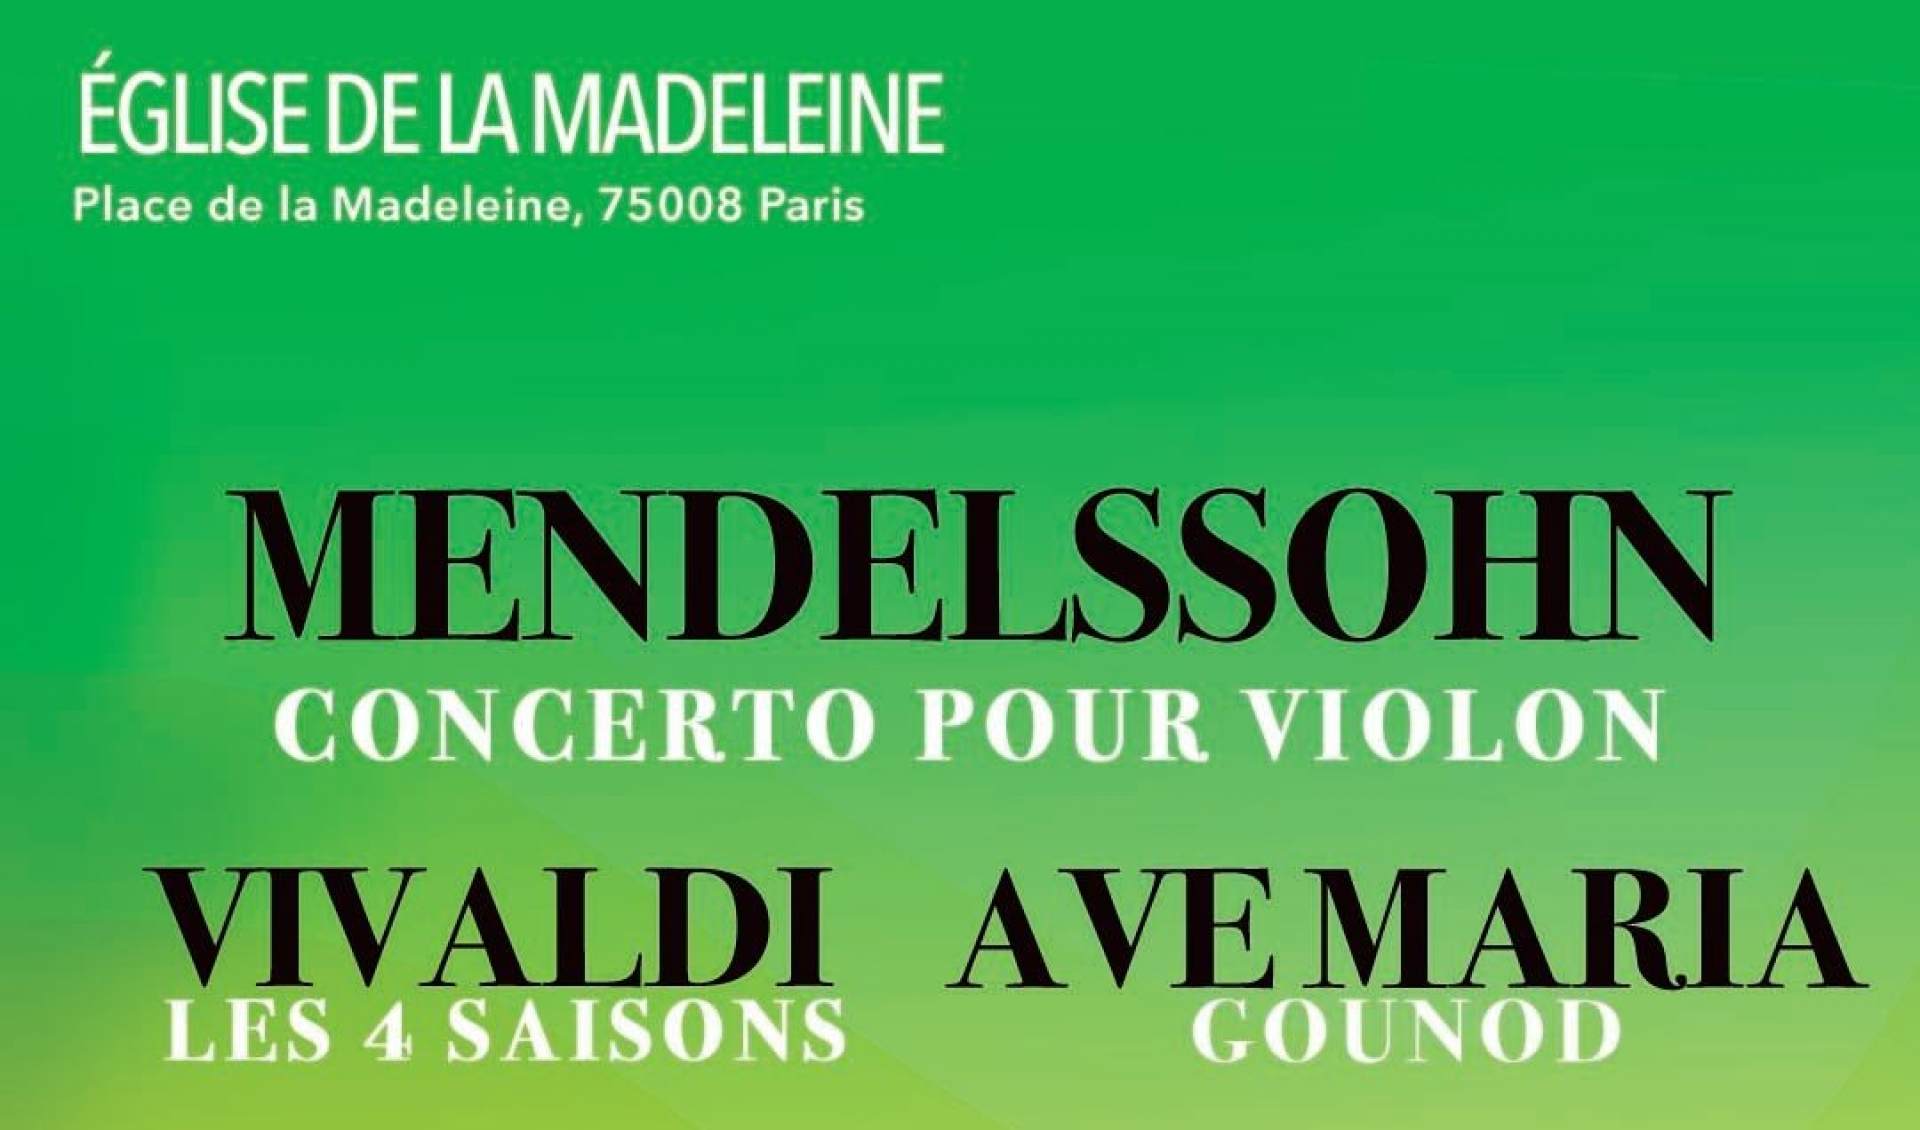 Four Seasons, Ave Maria, Mendelssohn